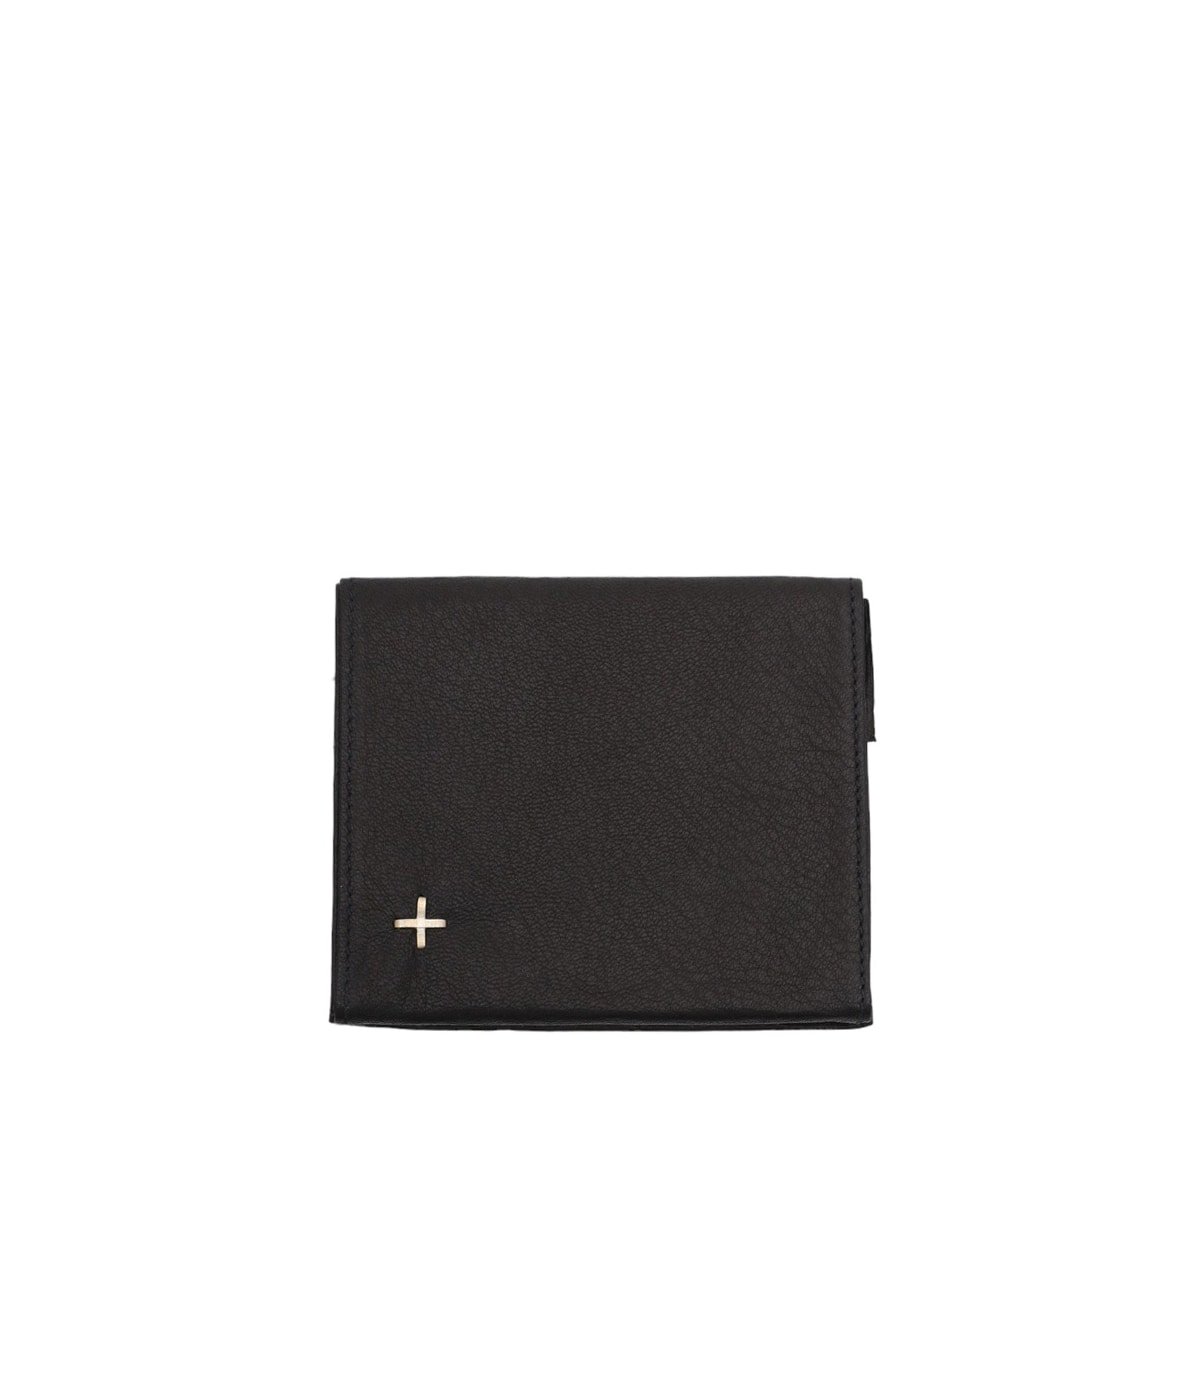 soft wallet 93 | m.a+(エムエークロス) / ファッション雑貨 財布